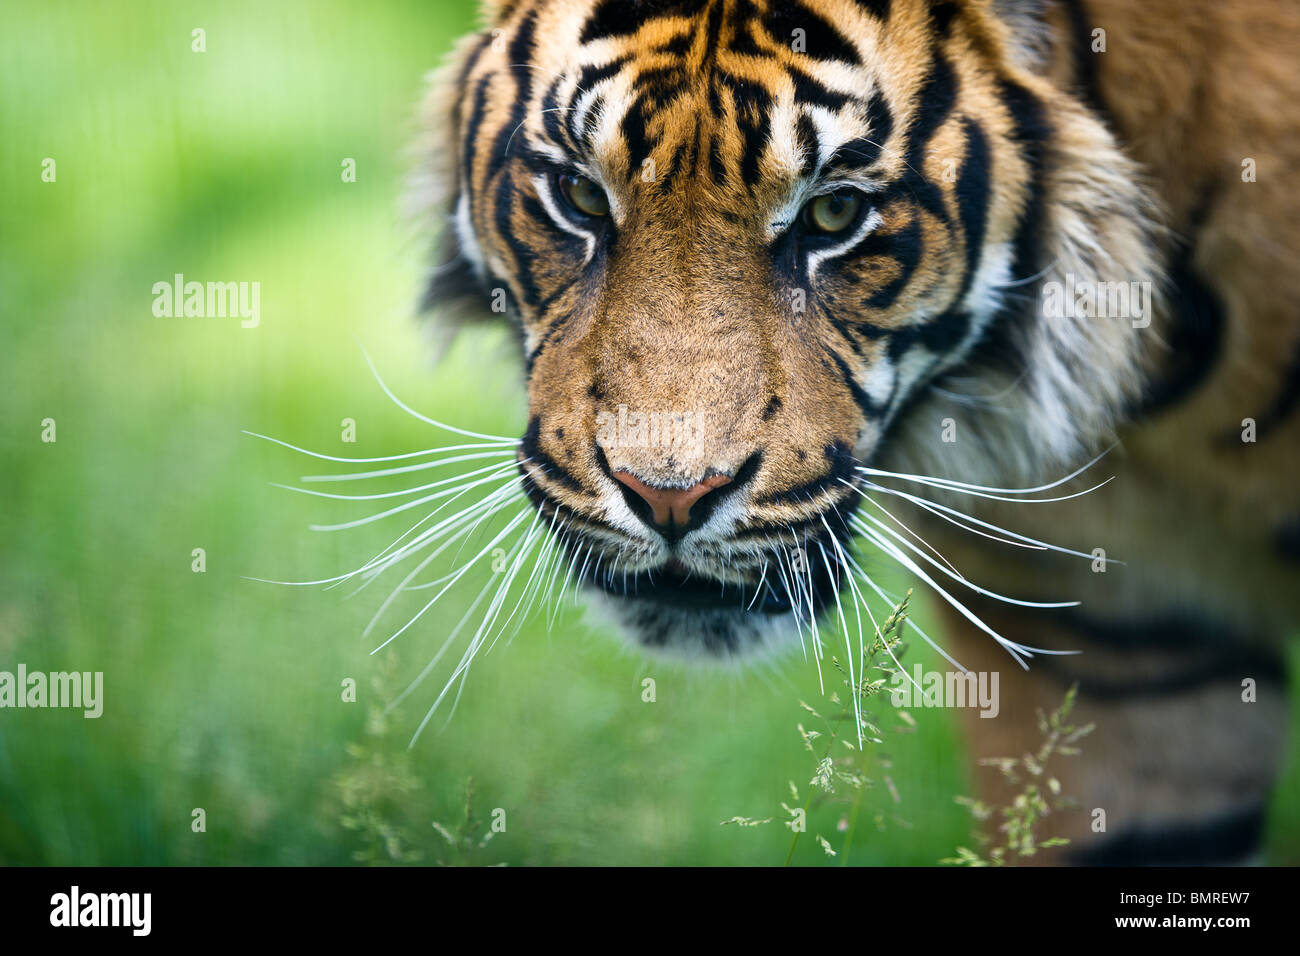 Headshot of Sumatran tiger looking menacingly towards camera Stock Photo